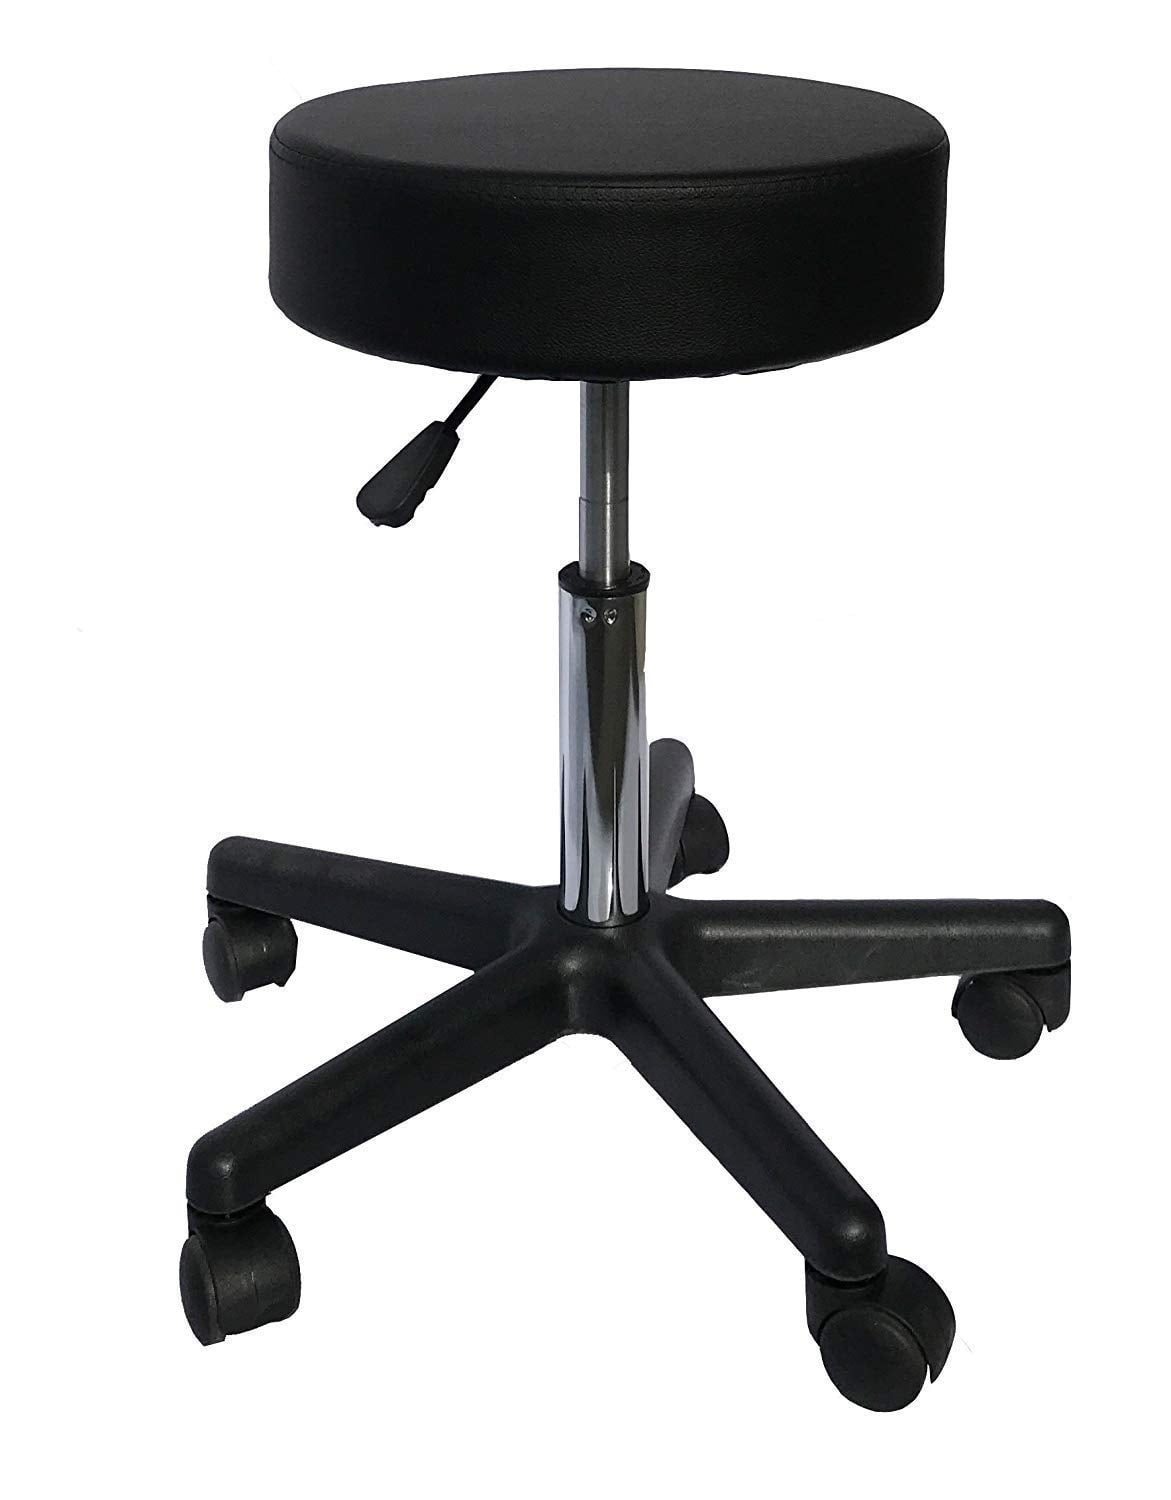 Deuba Swivel Stool Adjustable Work Chair Hydraulic Tattoo Spa Massage Seat PU Leather Thick Padding Black 